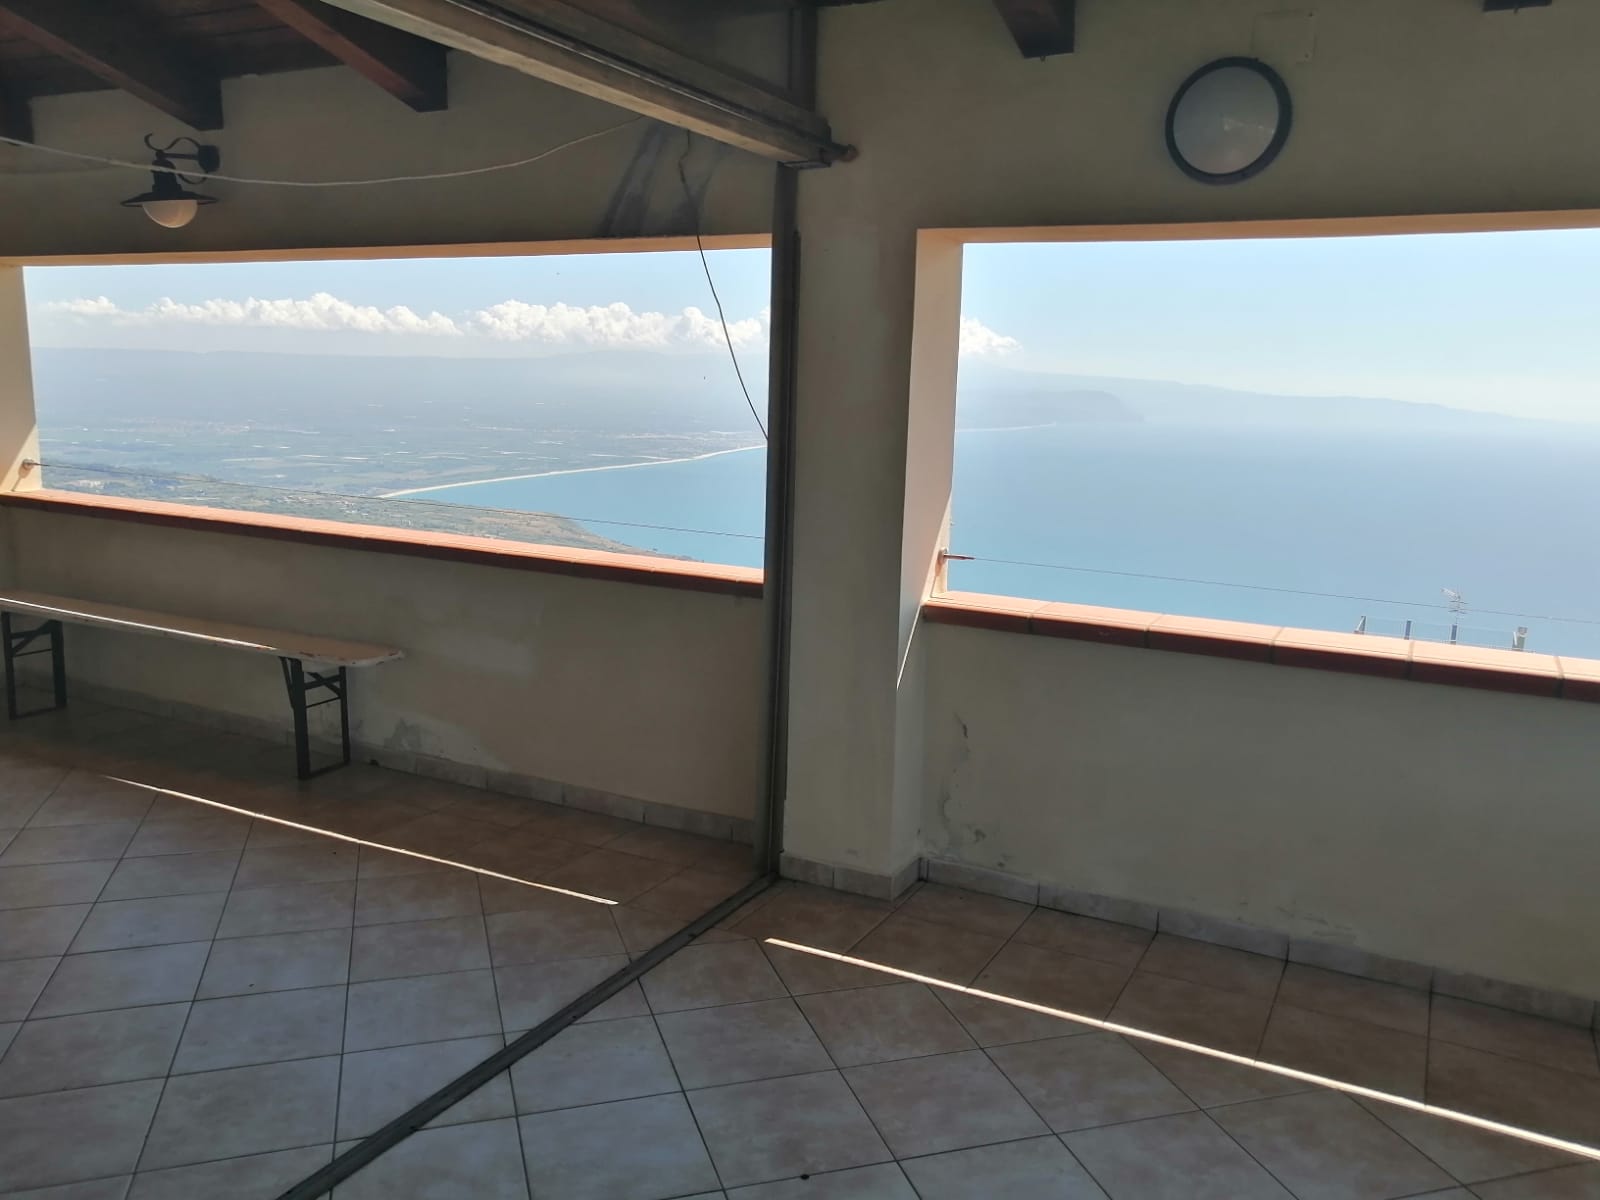 Villa con vista mare in Calabria